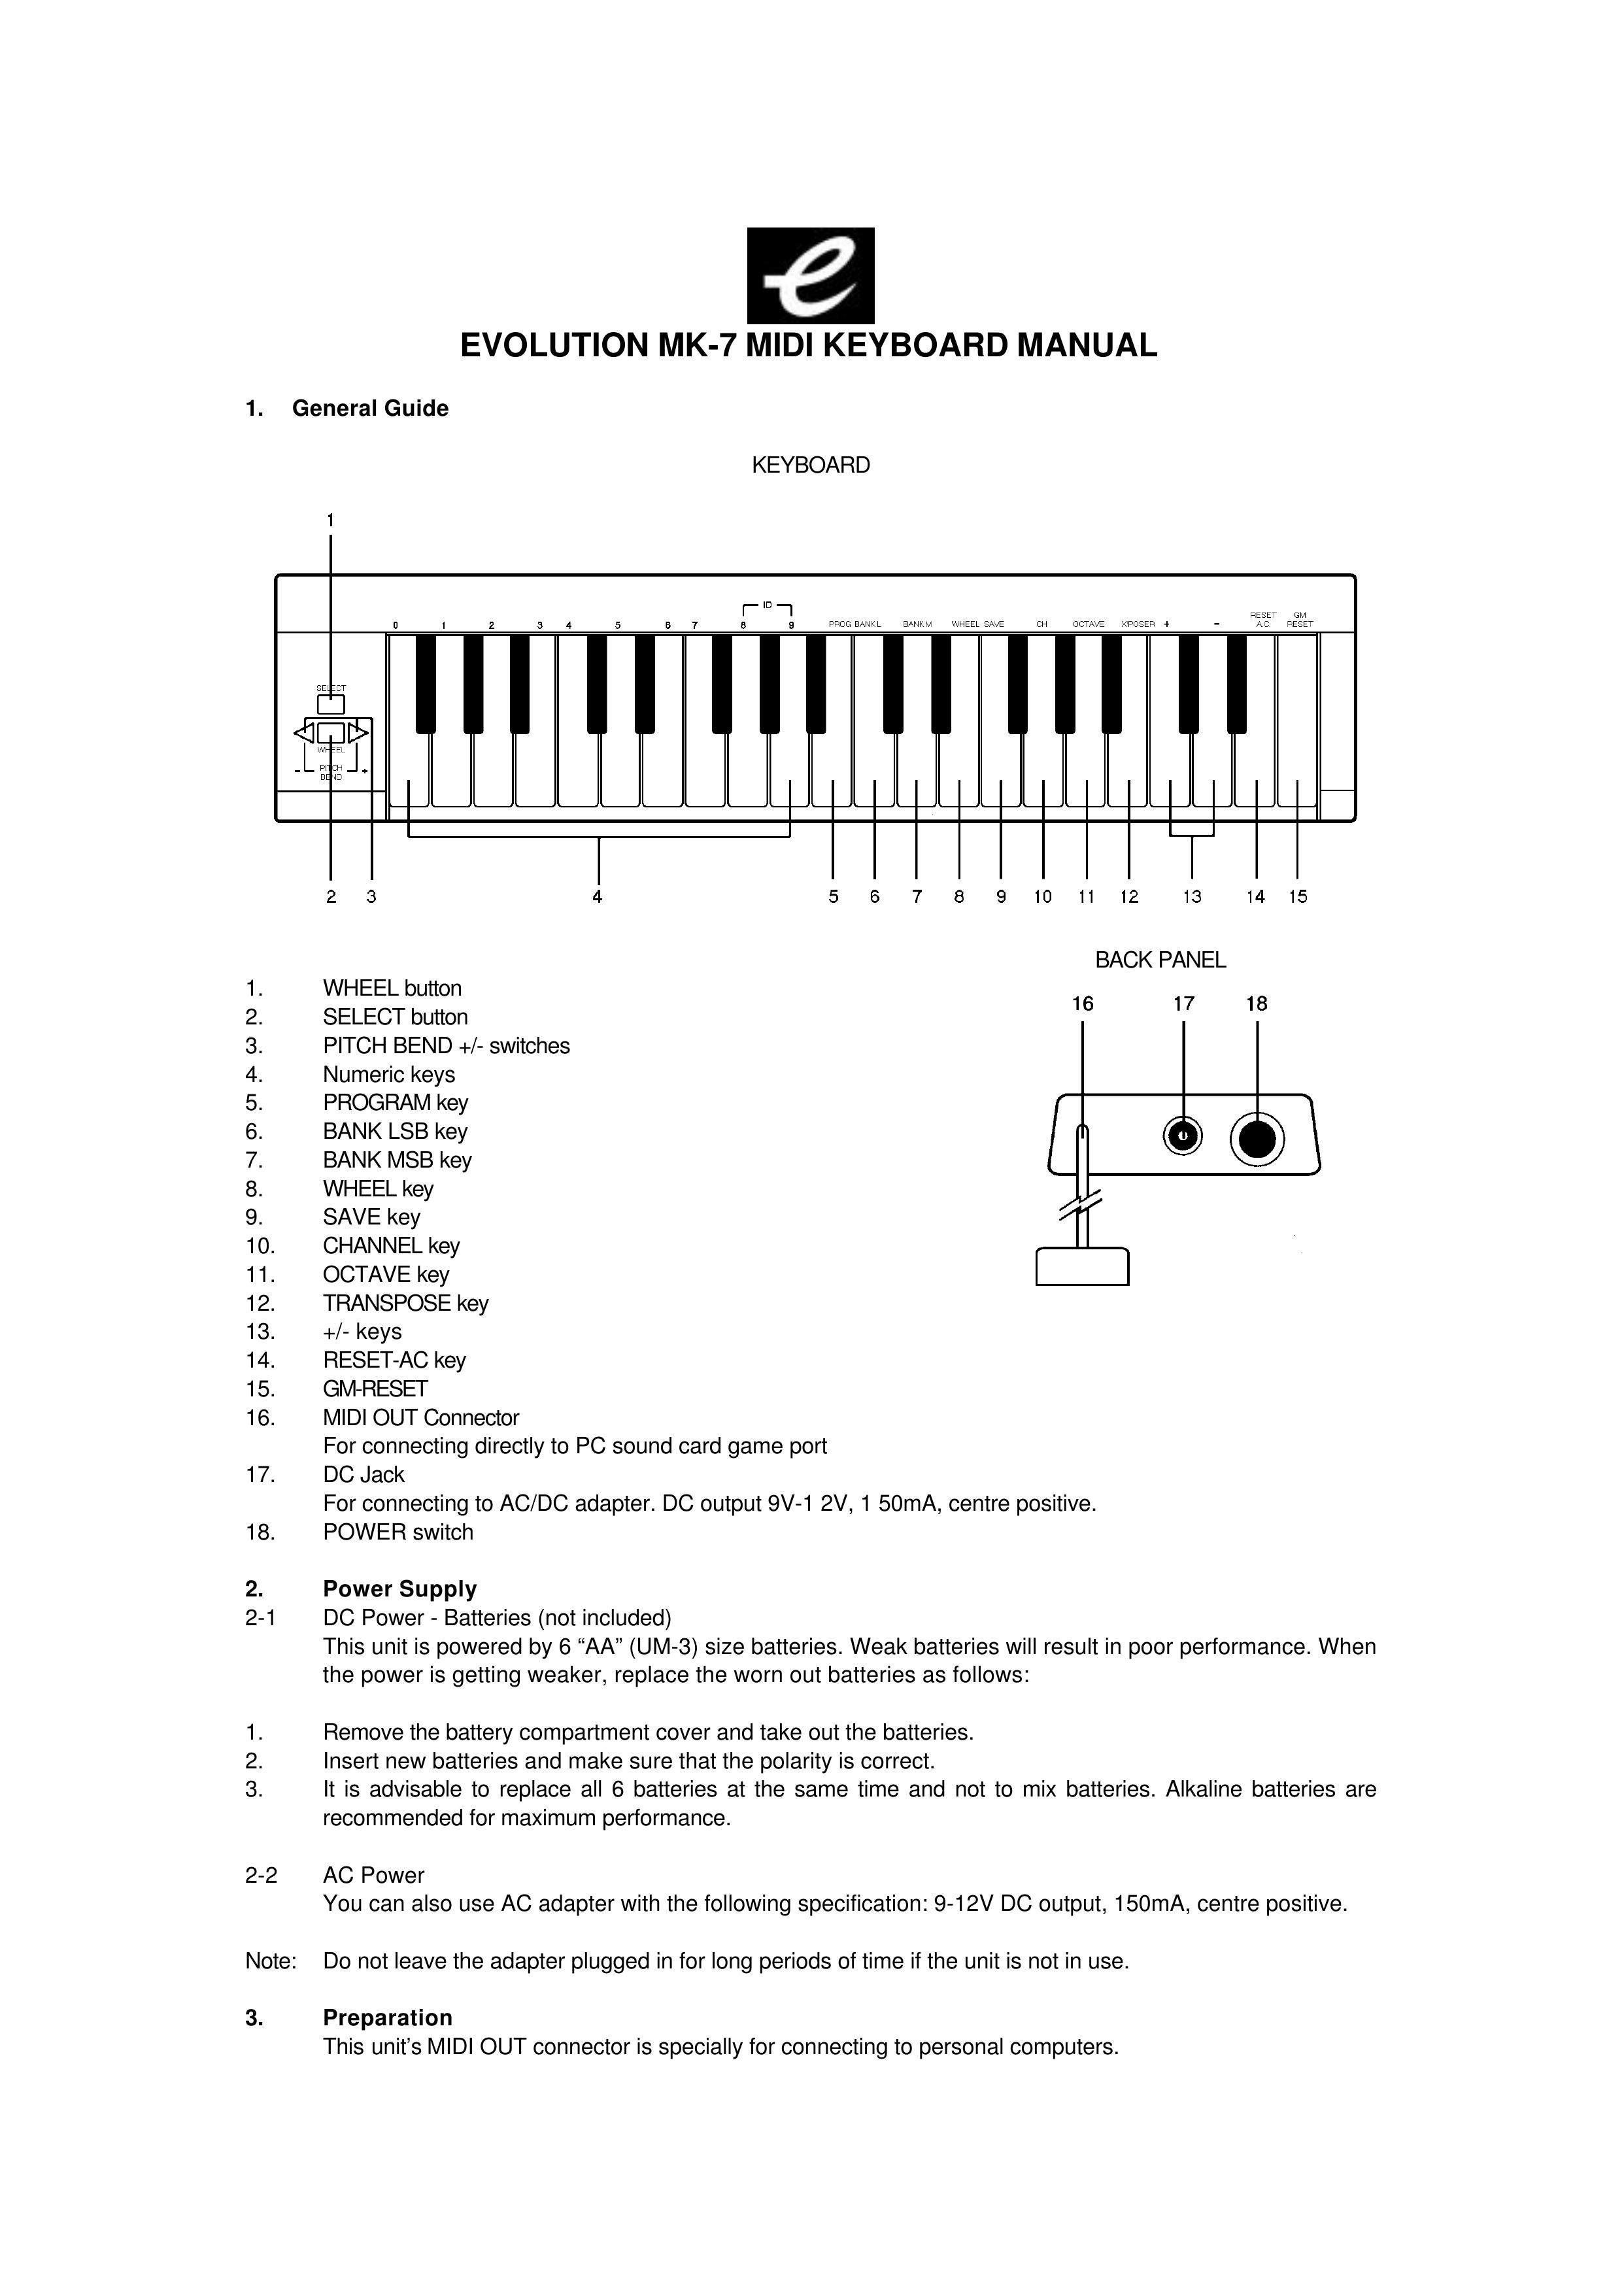 Evolution Technologies MK-7 Electronic Keyboard User Manual